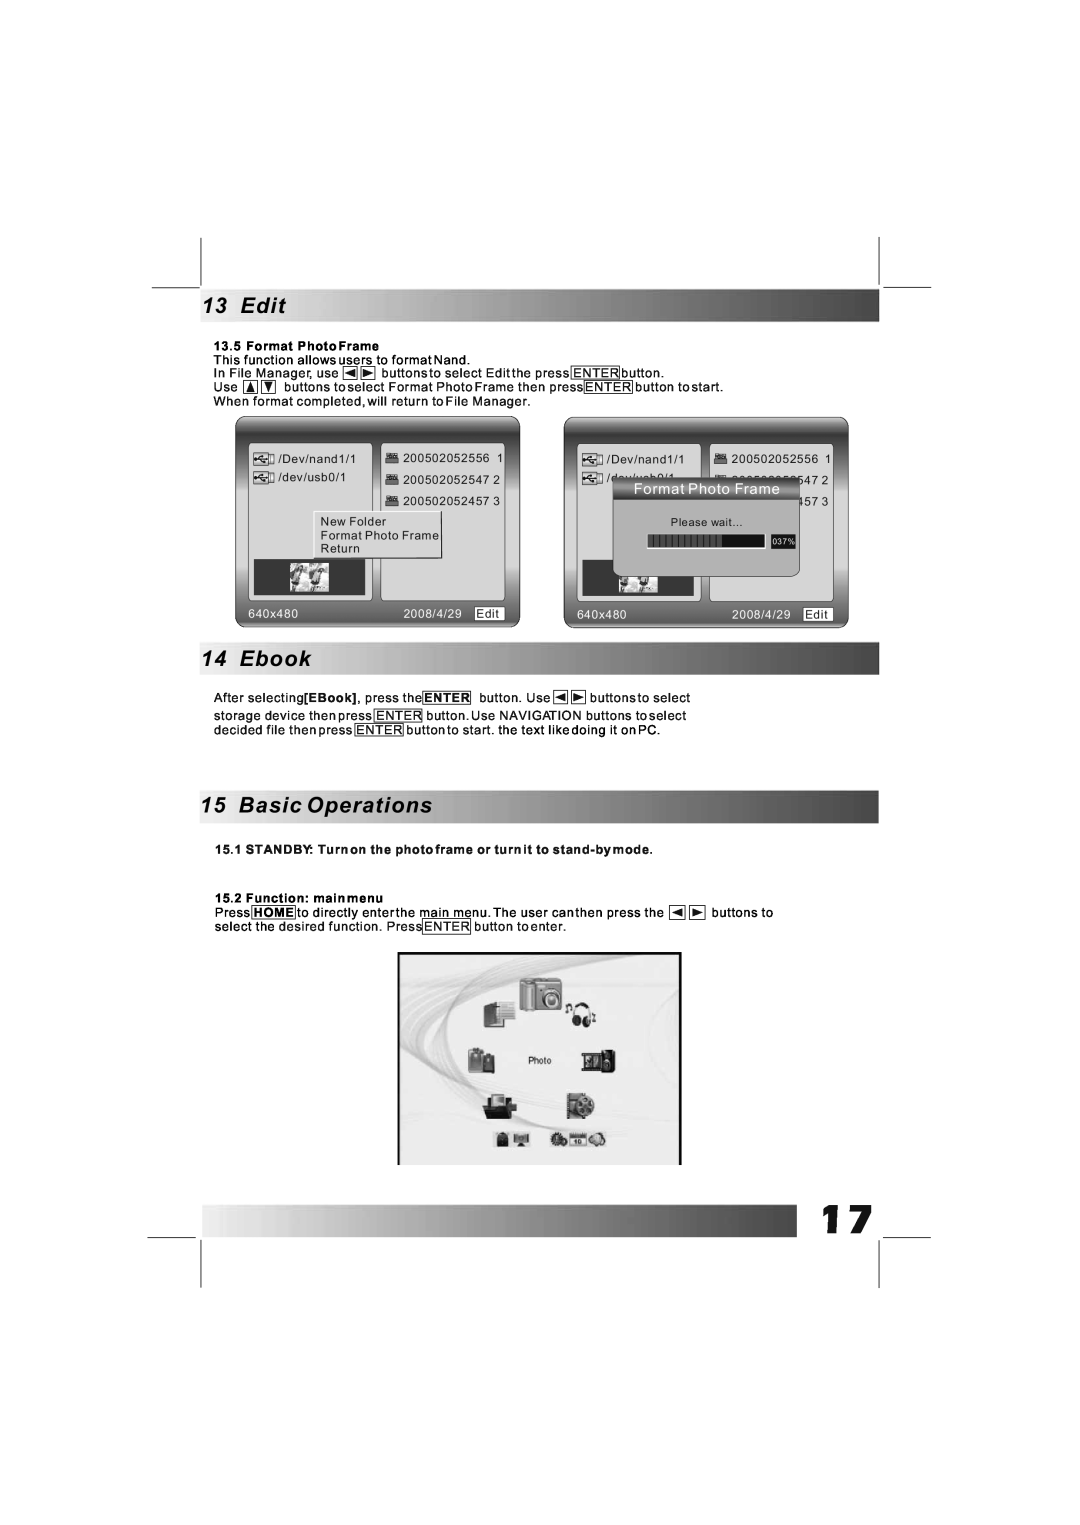 Bush DPF801/DPF1001 manual Ebook, Basic Operations, Format Photo Frame, 2008/4/29 Edit, Function main menu, 640x480 